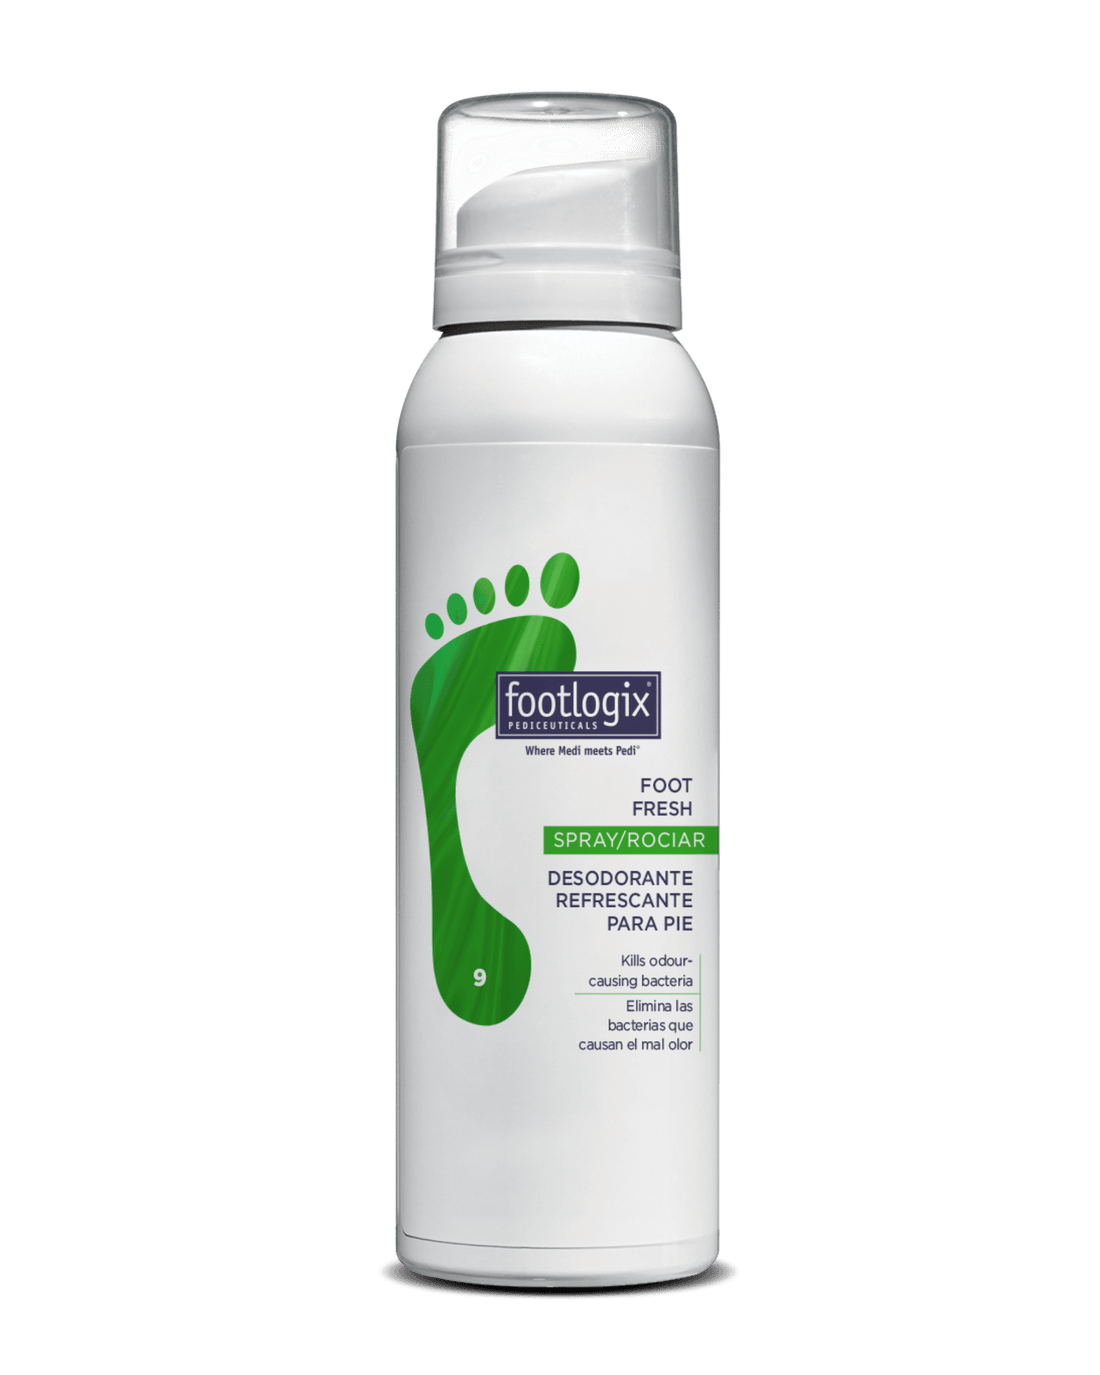 Footlogix Foot Fresh Spray